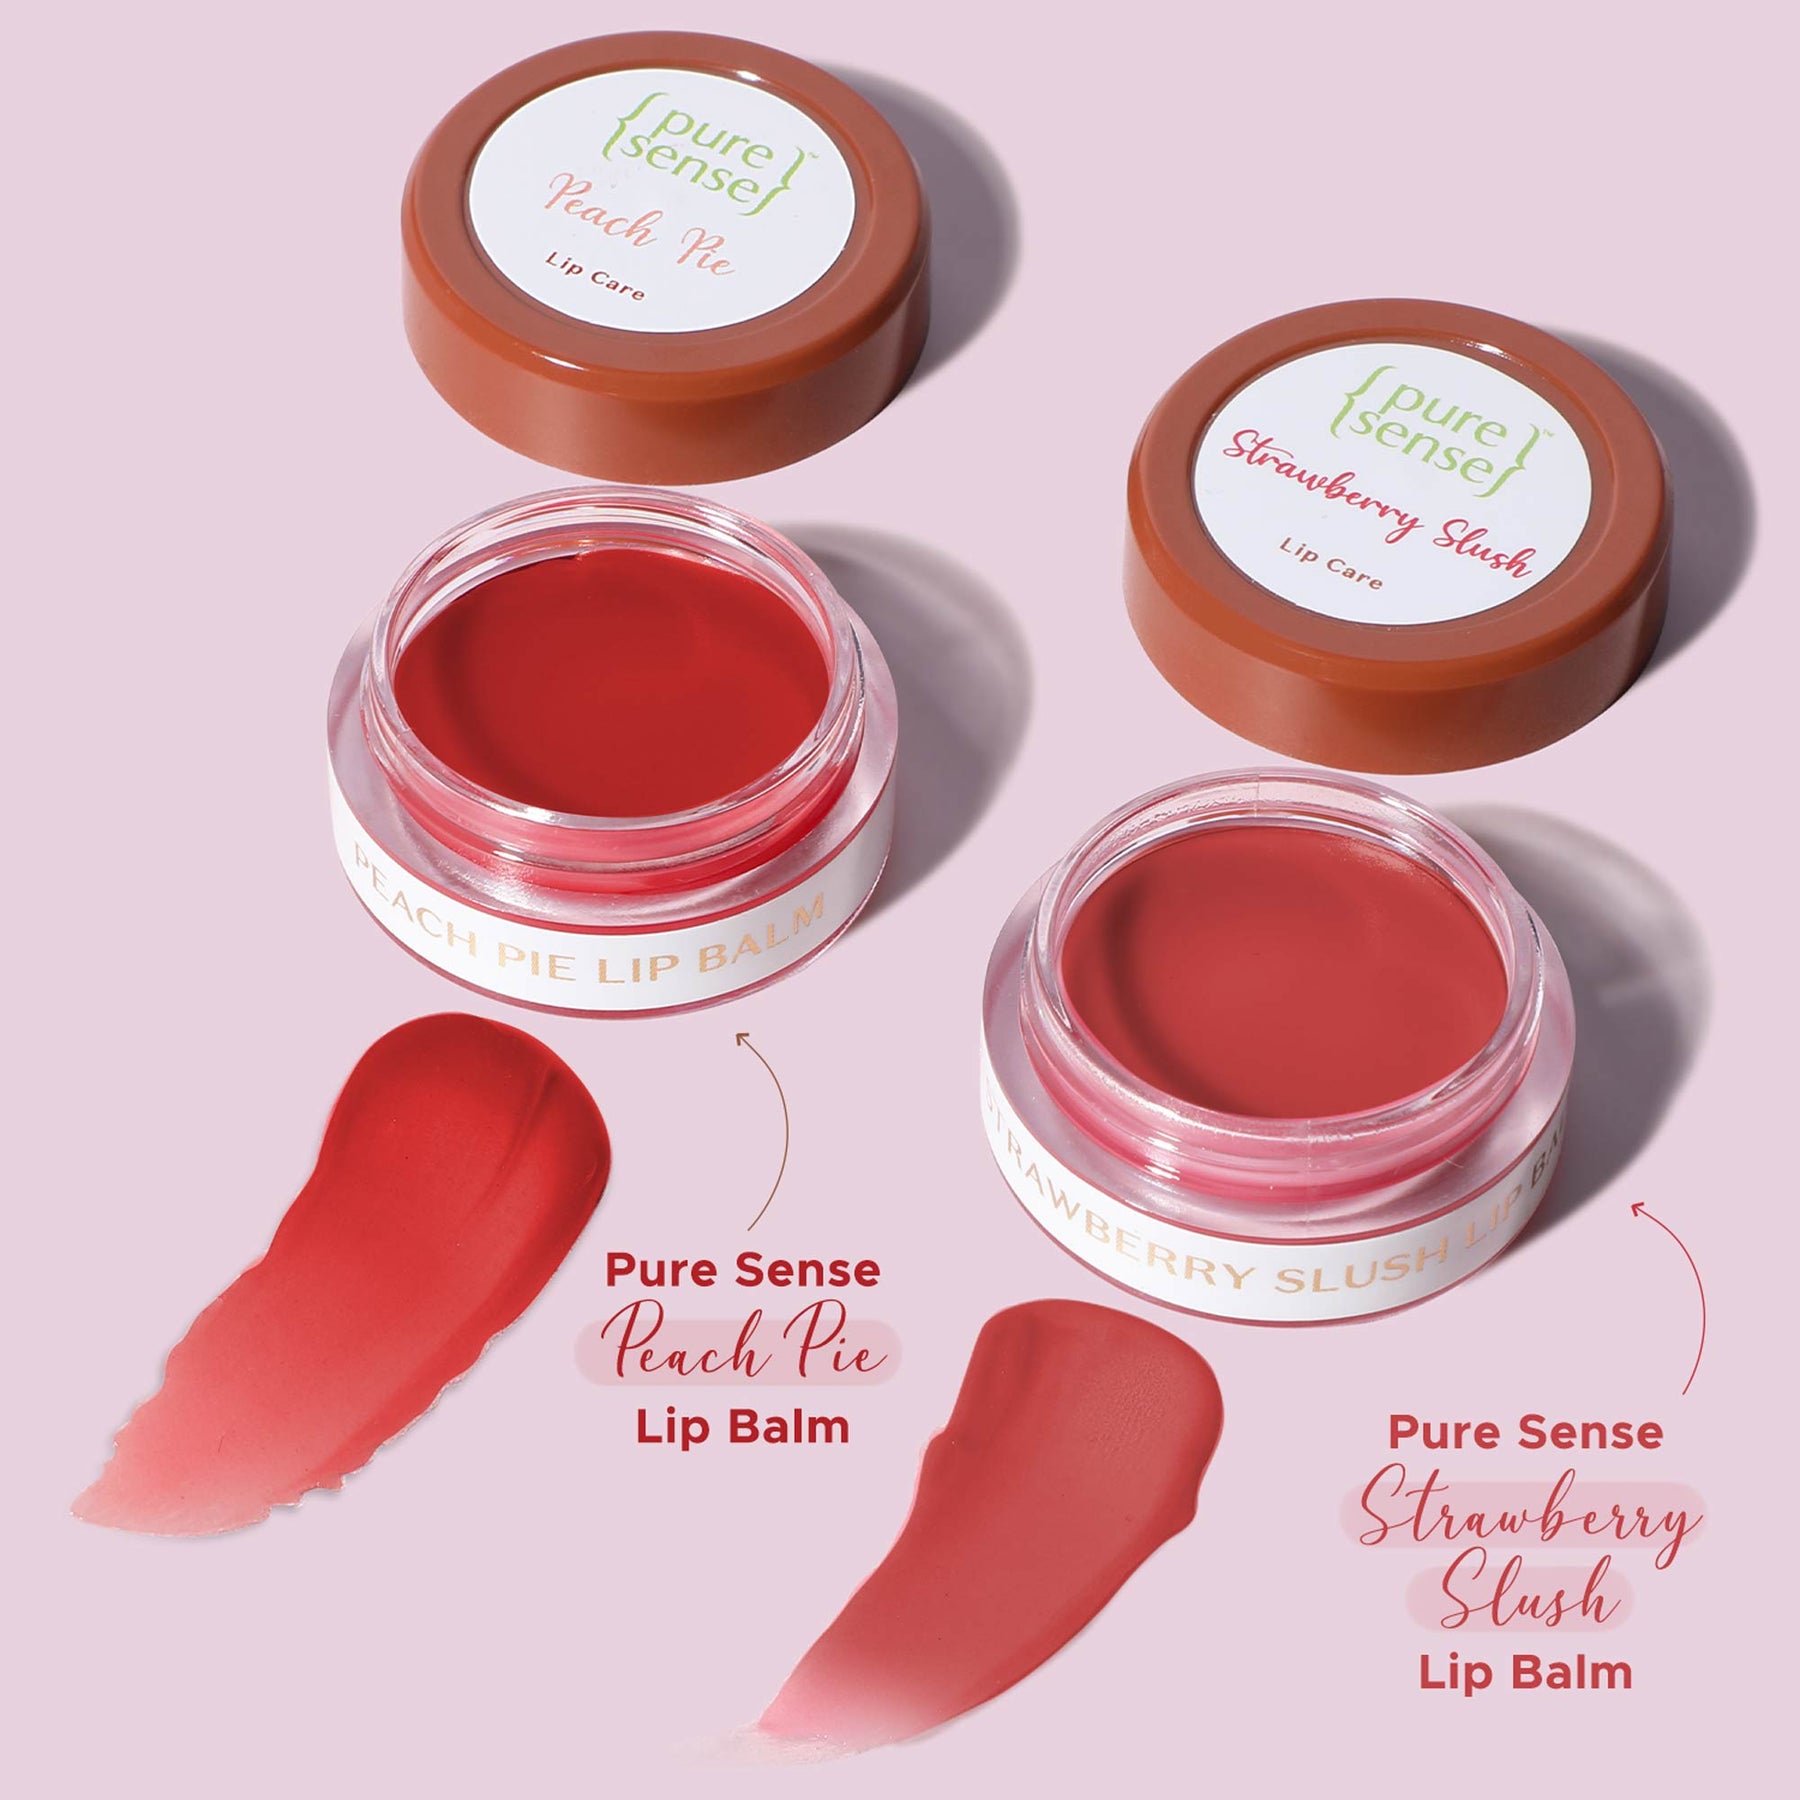 Peach Pie Lip Balm 5ml+ Strawberry Slush Lip Balm 5ml | From the makers of Parachute Advansed | 10ml - PureSense